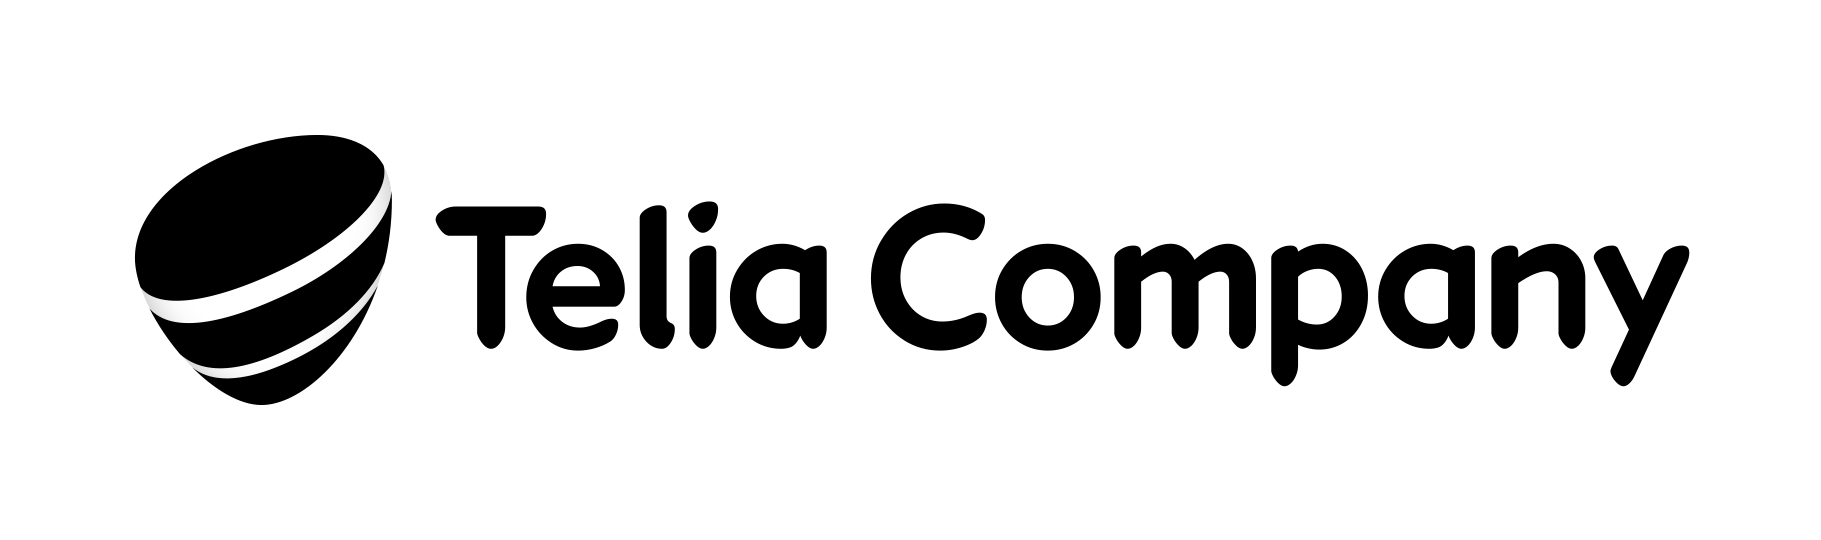 Black Company Logo - Our logotype - Telia Company